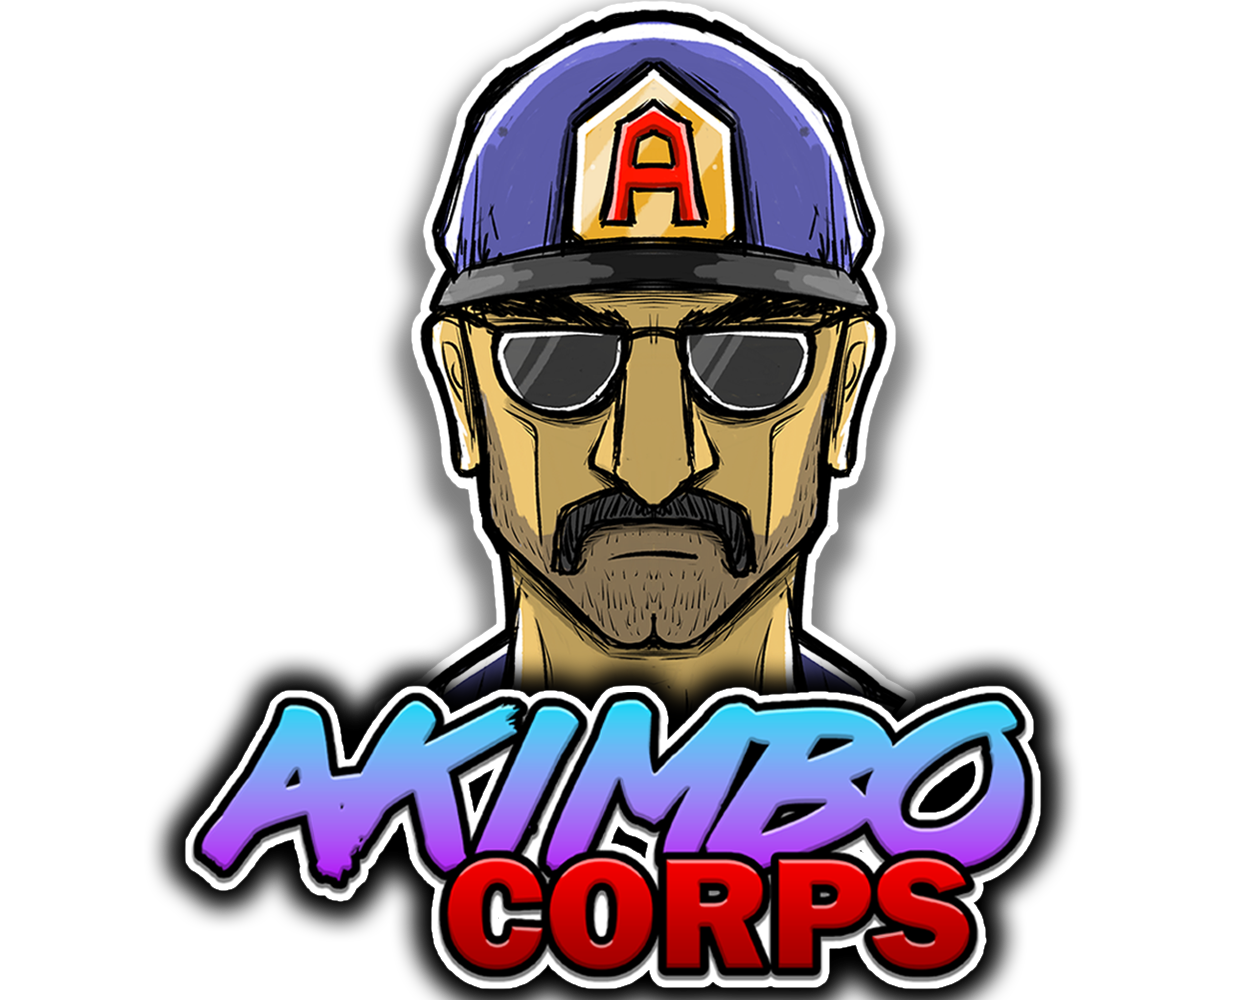 Akimbo Corps